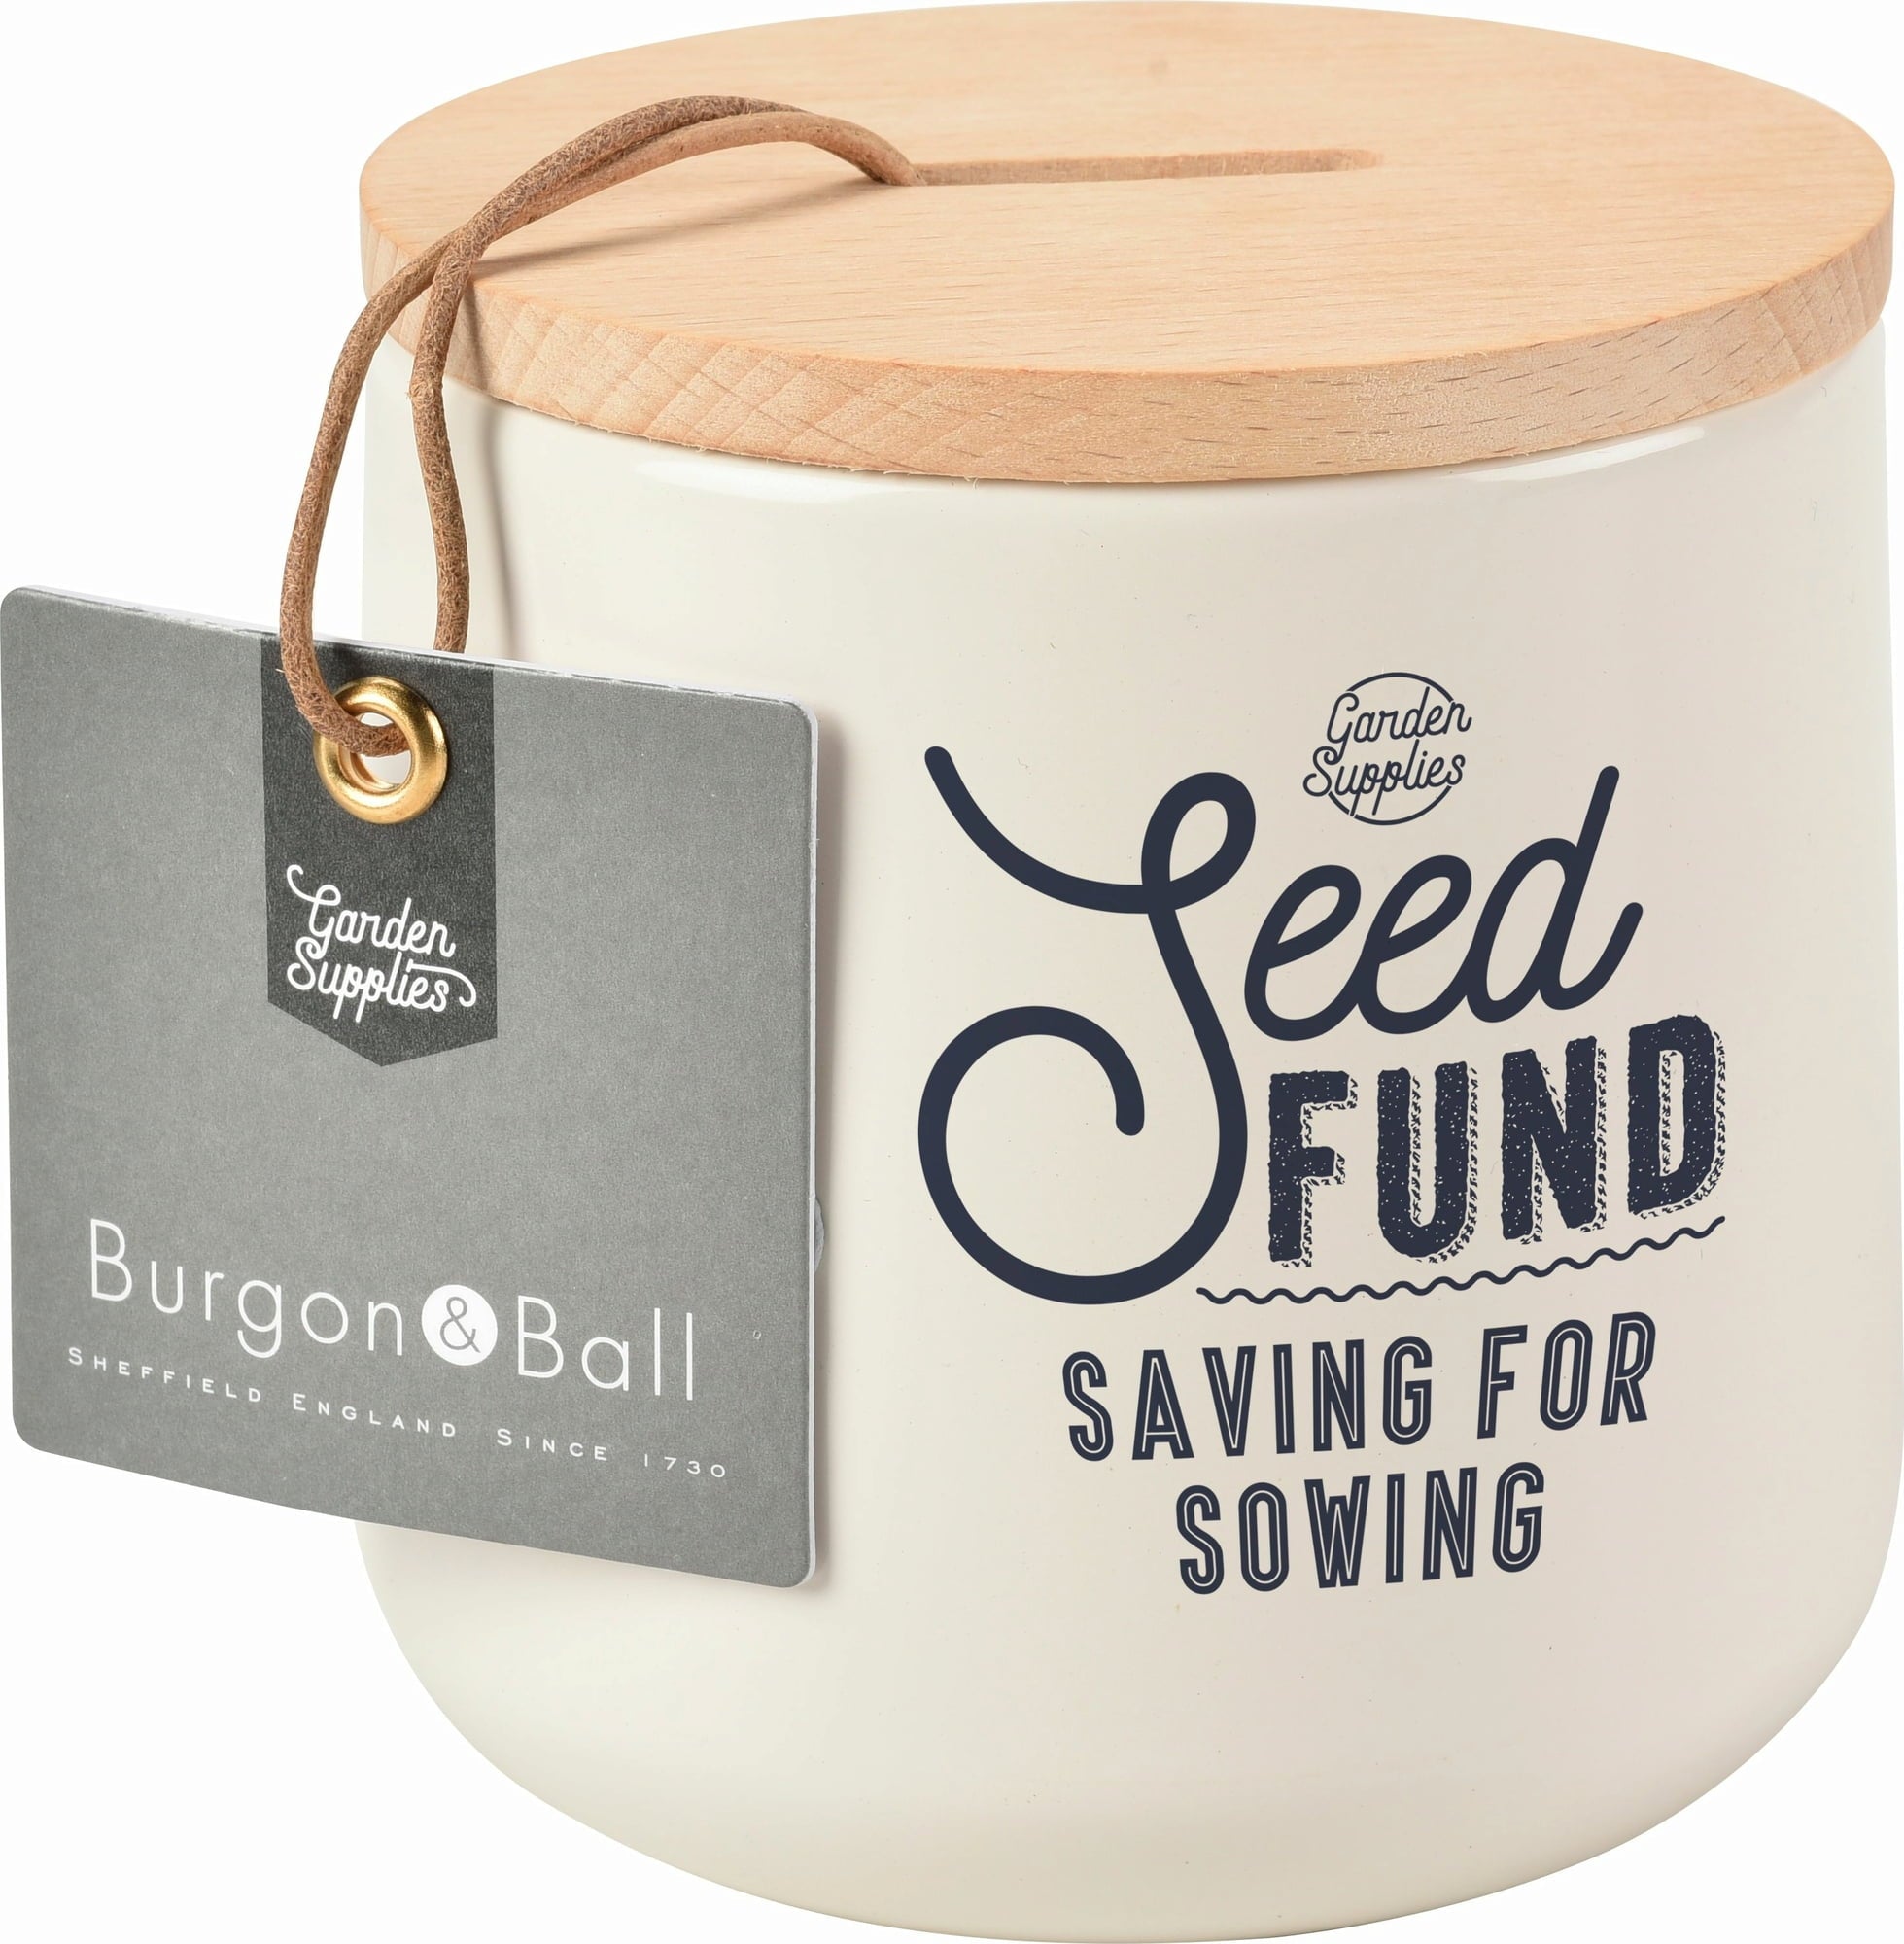 Burgon & Ball - Hedge Fund Piggy Bank